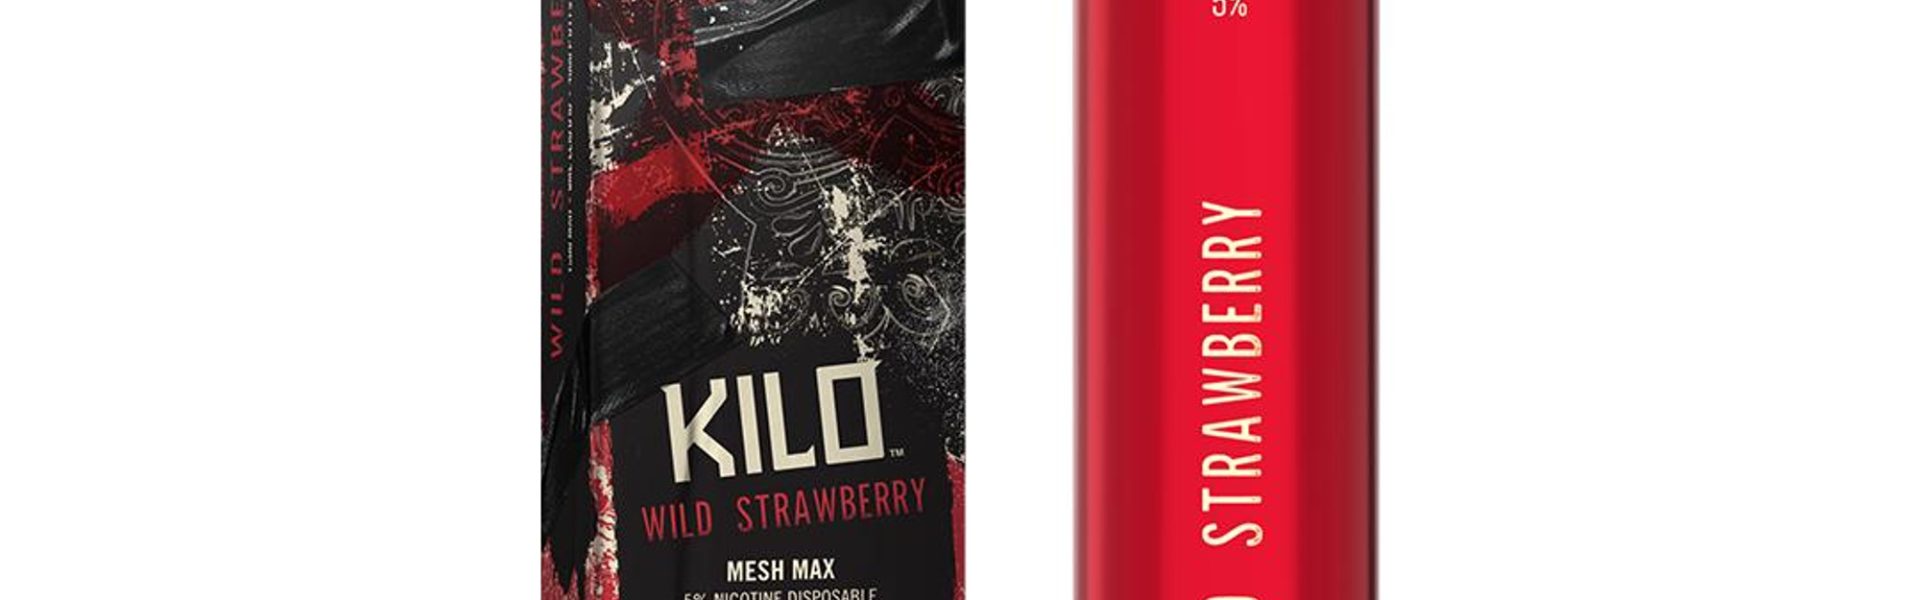 Esco Bars Kilo Wild Strawberry – Disposable Vape Flavors